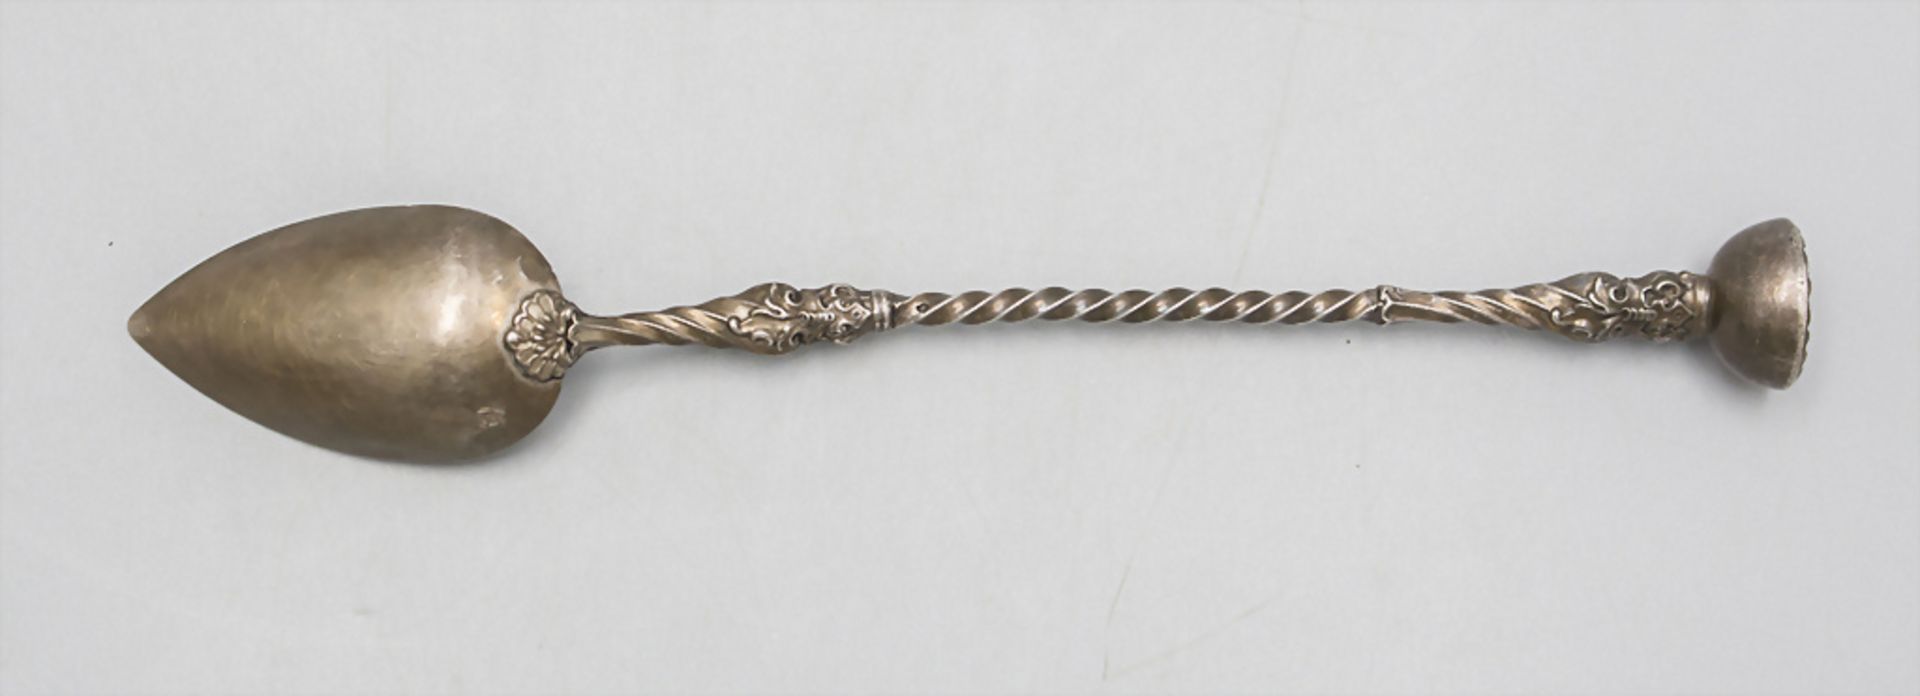 Apothekerlöffel / A pharmacist's silver spoon, Philippe Berthier, Paris, um 1850 - Image 2 of 6